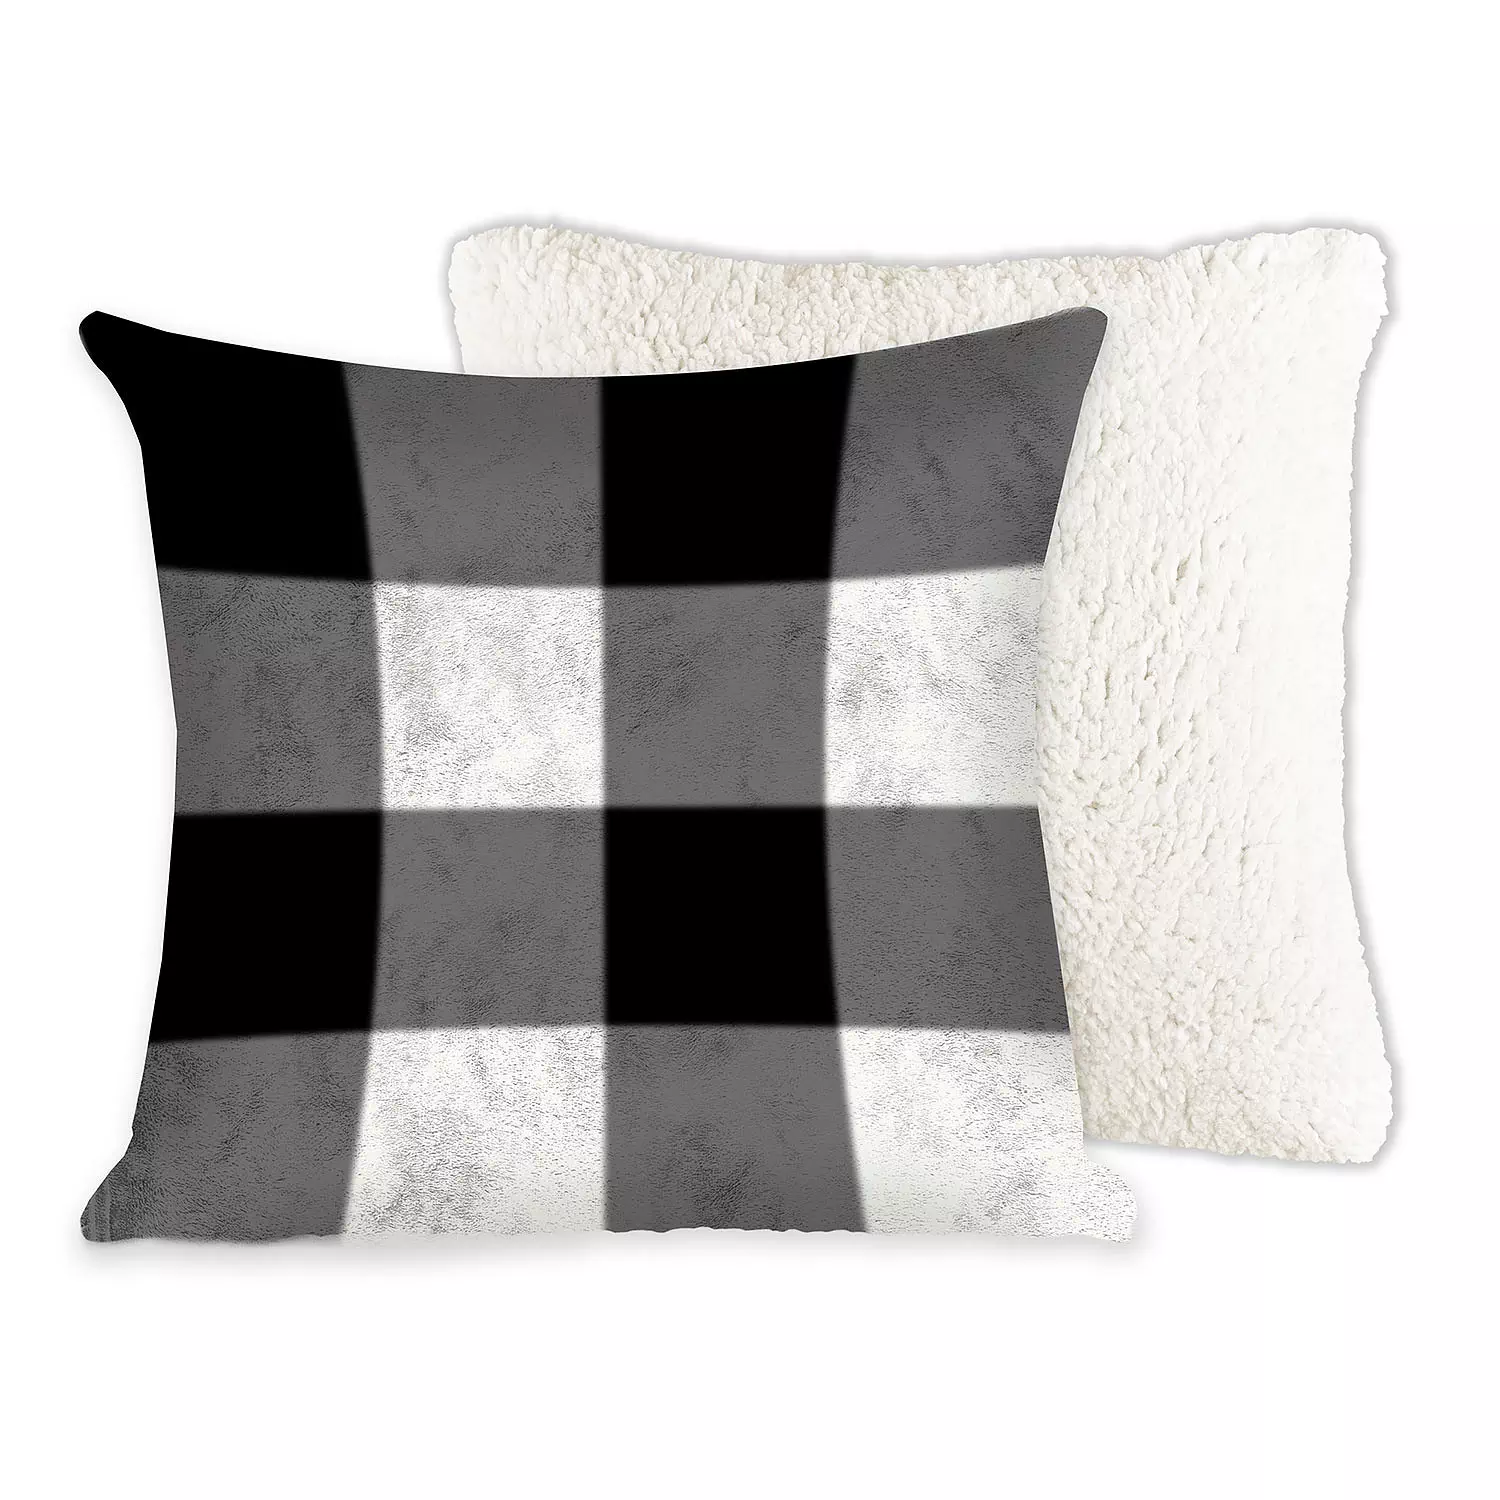 Black & white buffalo plaid decorative cushion with sherpa back, 17"x17"